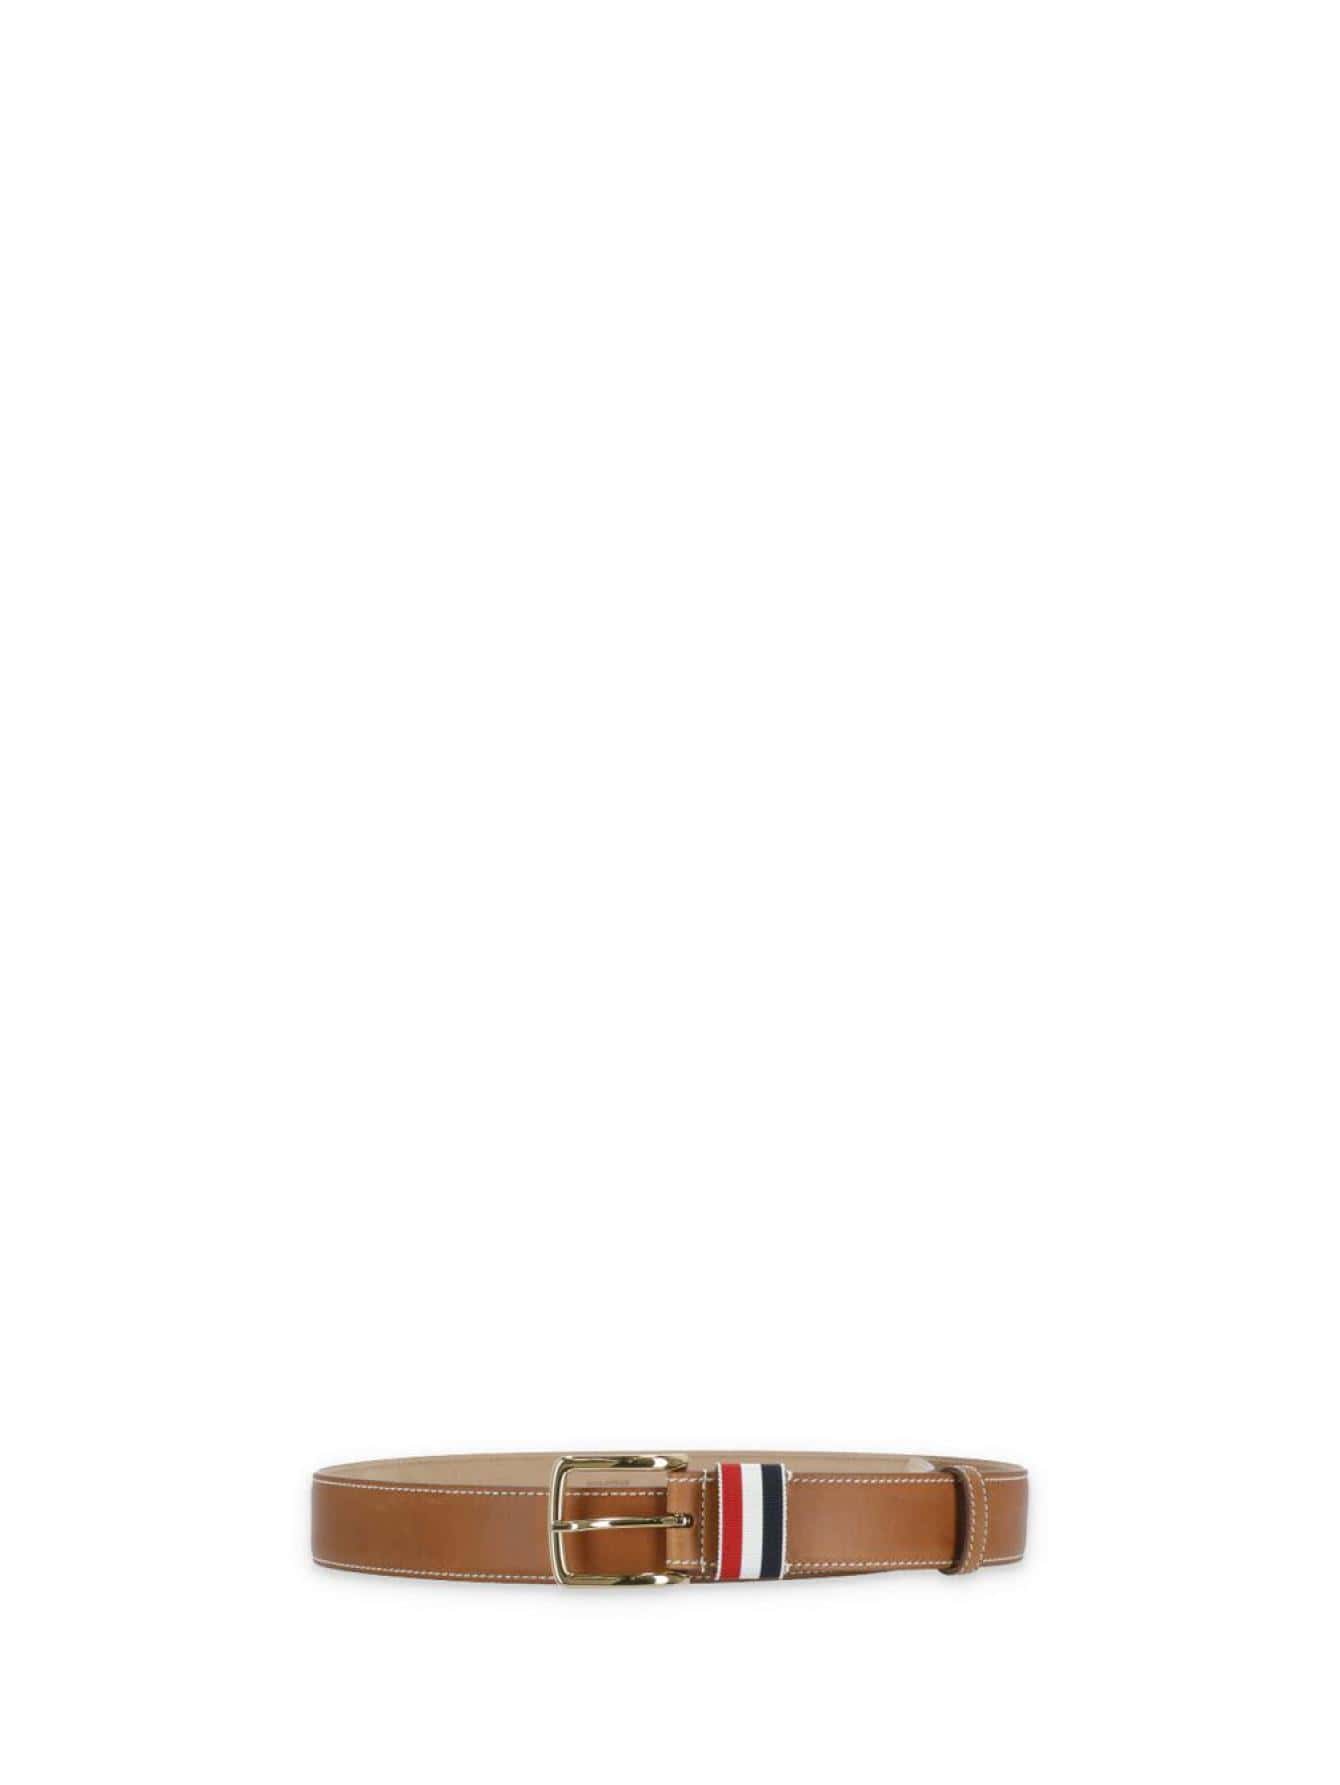 Ремень мужской Thom Browne BROWN MCX039AL0044255, коричневый gours genuine leather belts men high quality golden buckle jeans belt cowskin casual belts business belt cowboy waistband pdm006